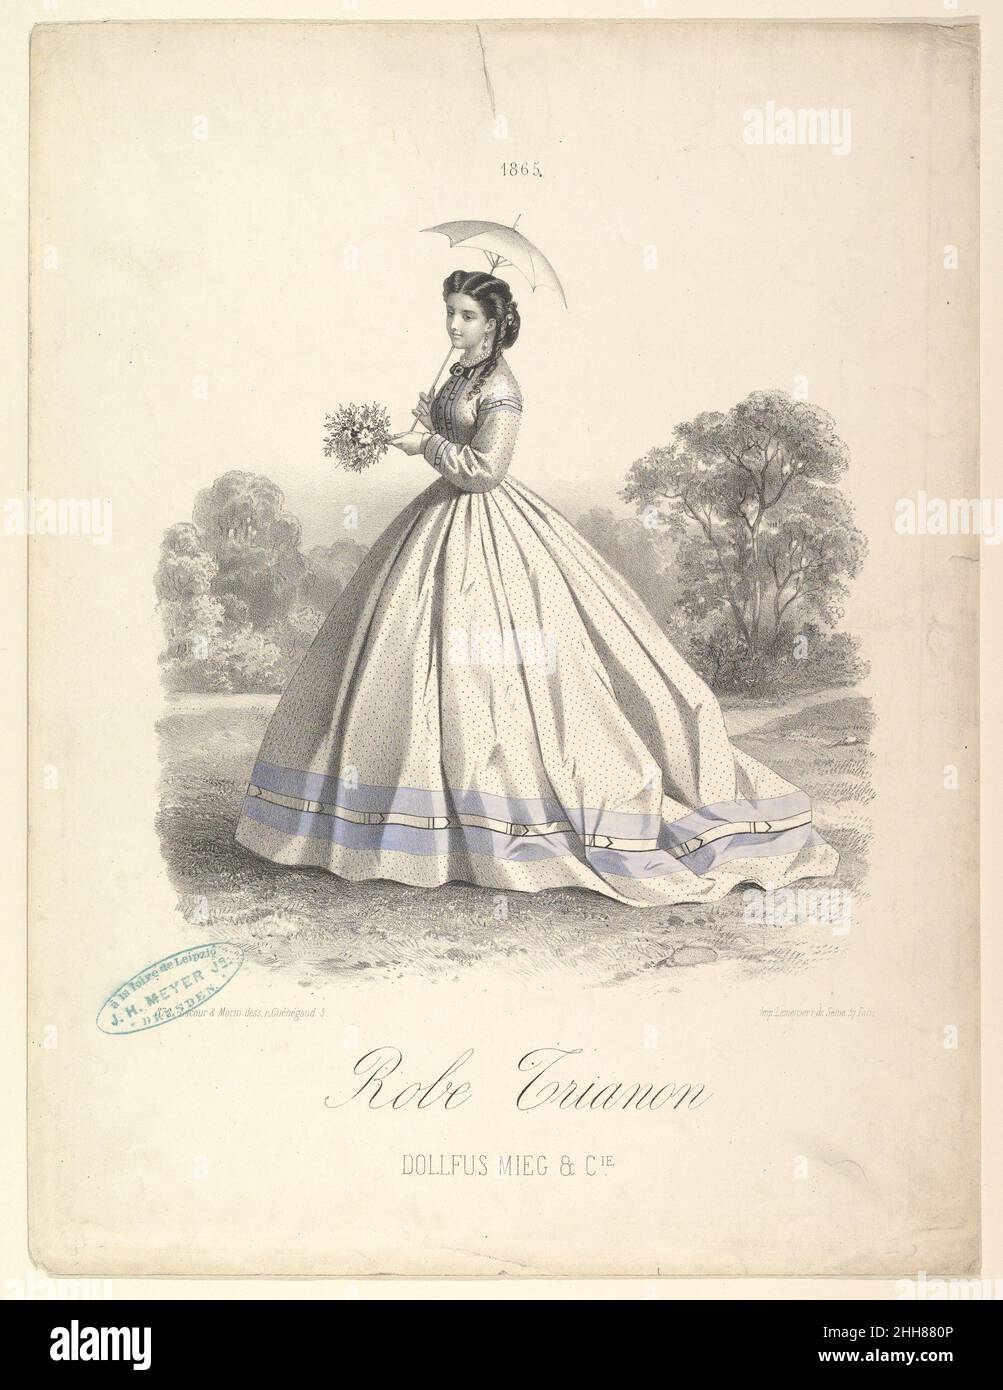 Robe Trianon, Dollfus Mieg & Cie 1865 Lemercier & Cie. Français.Robe Trianon, Dollfus Mieg & Cie 398874 Banque D'Images